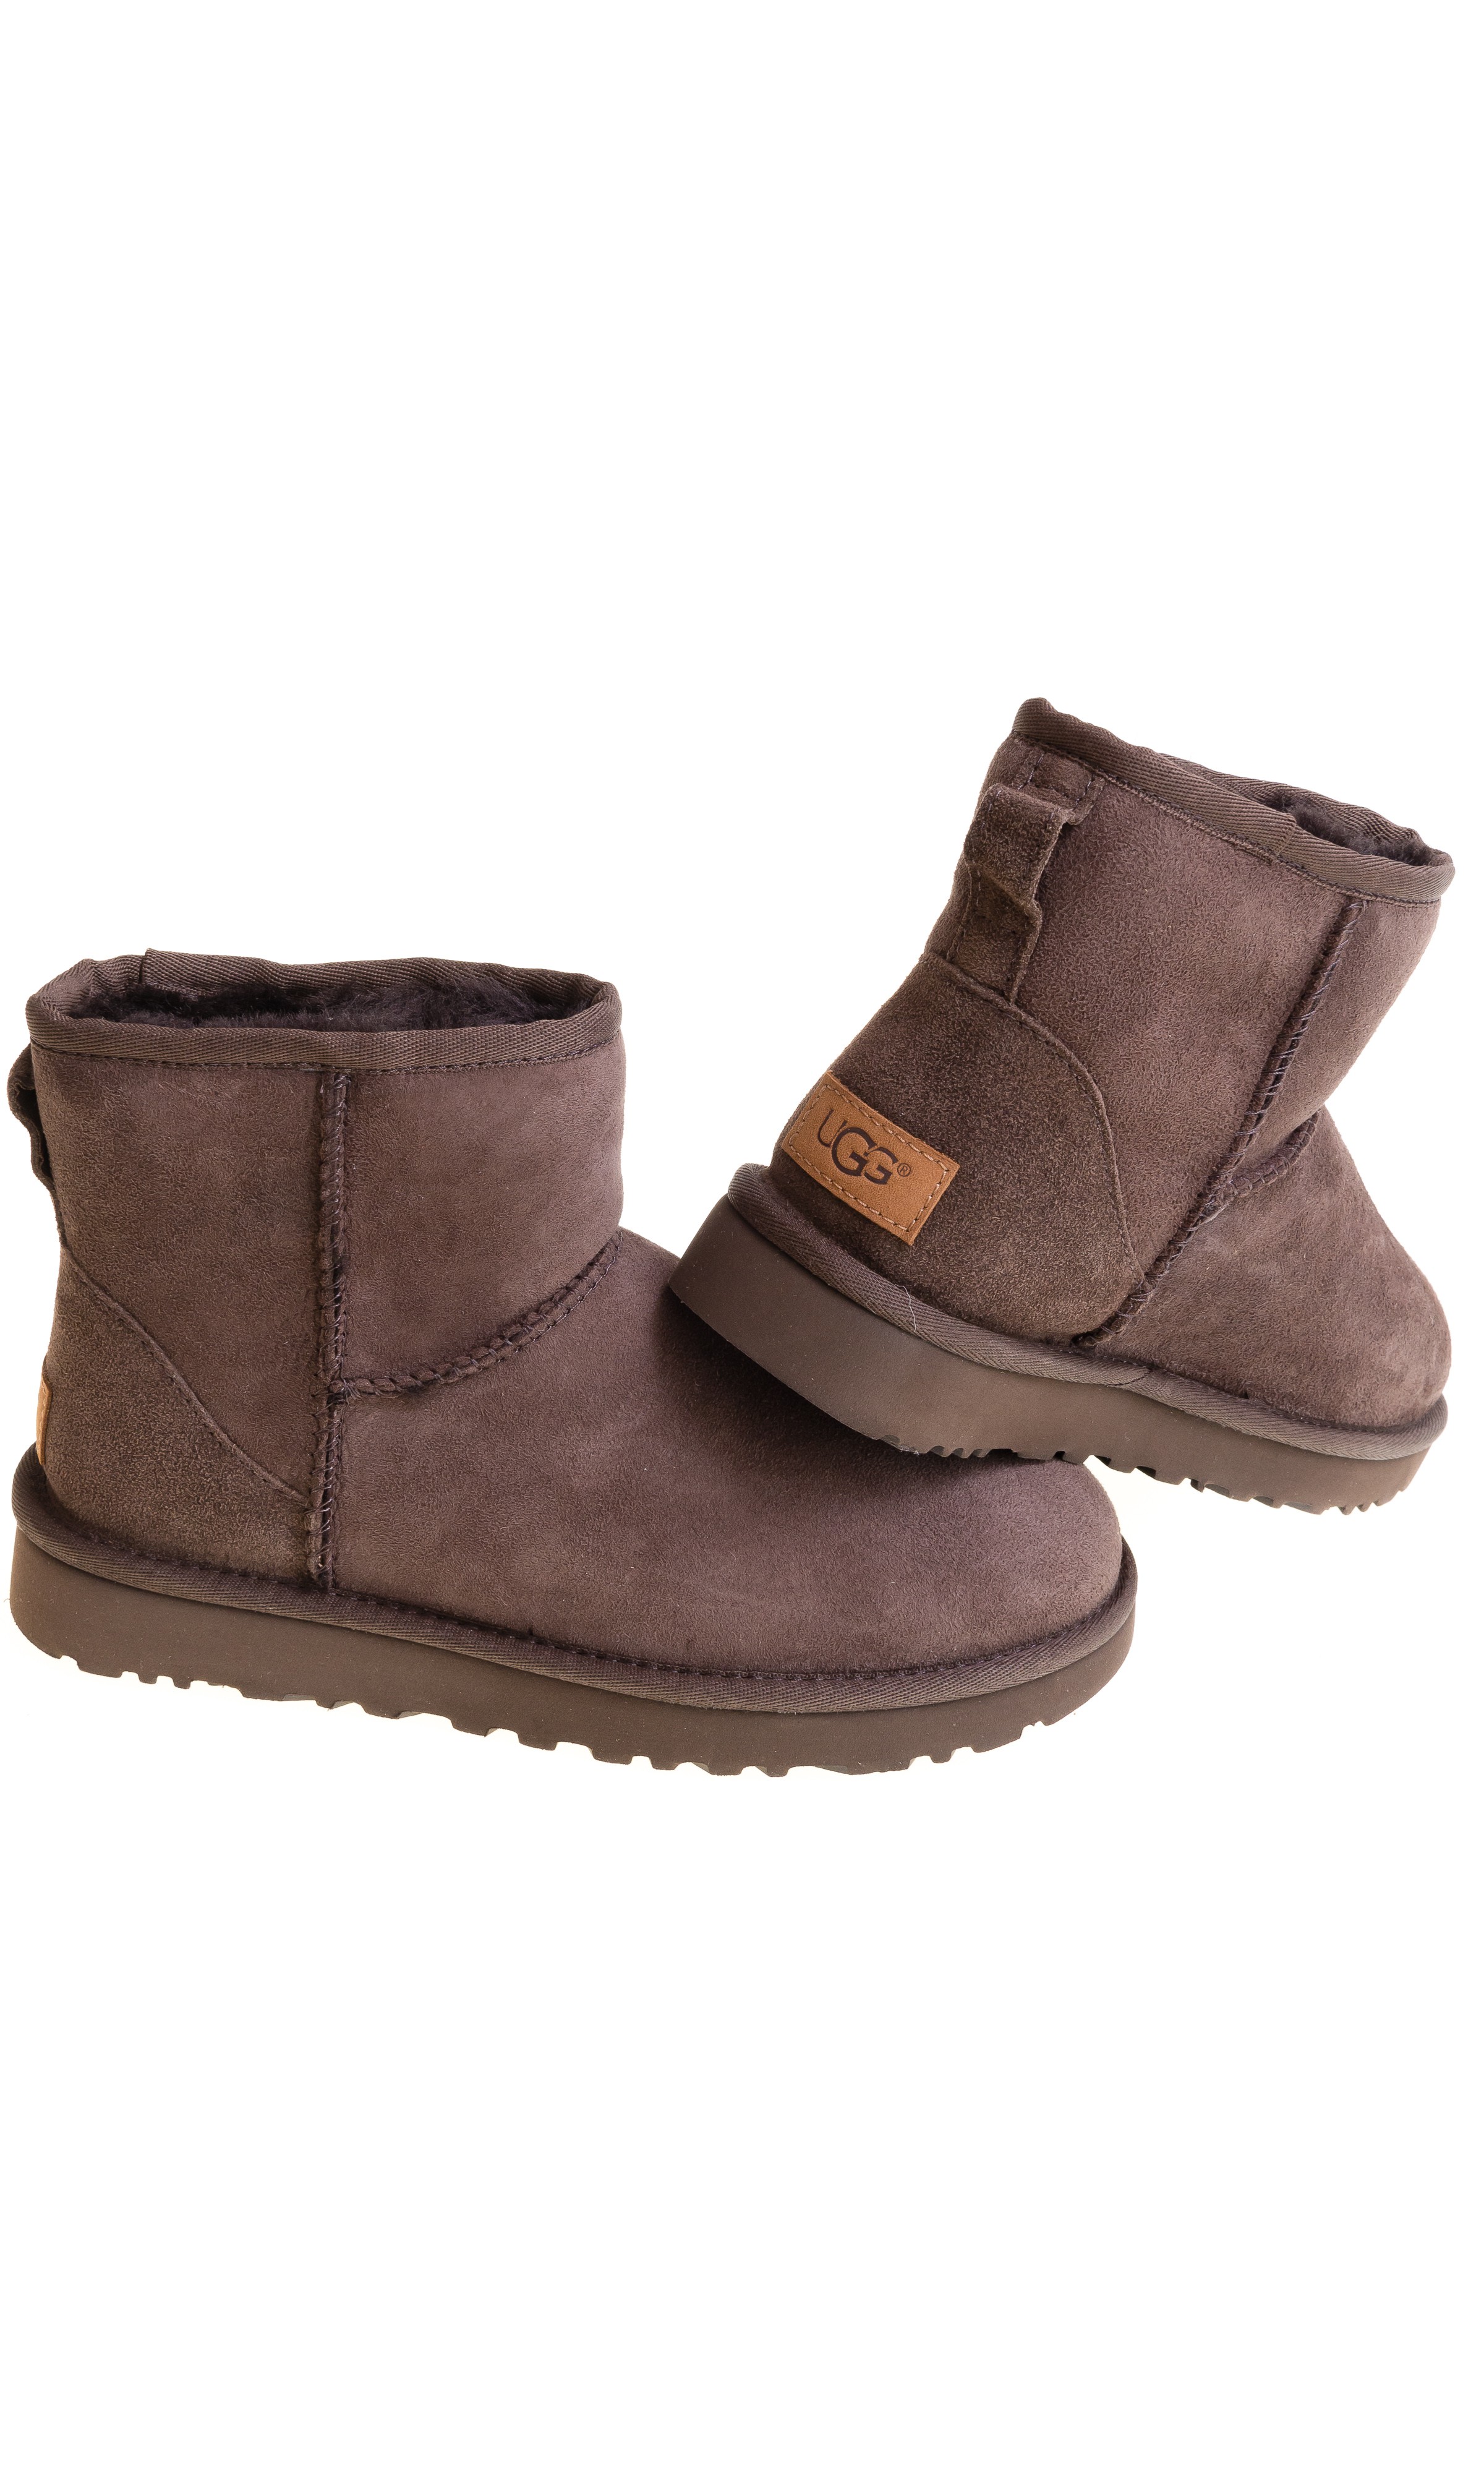 ugg chocolate brown boots